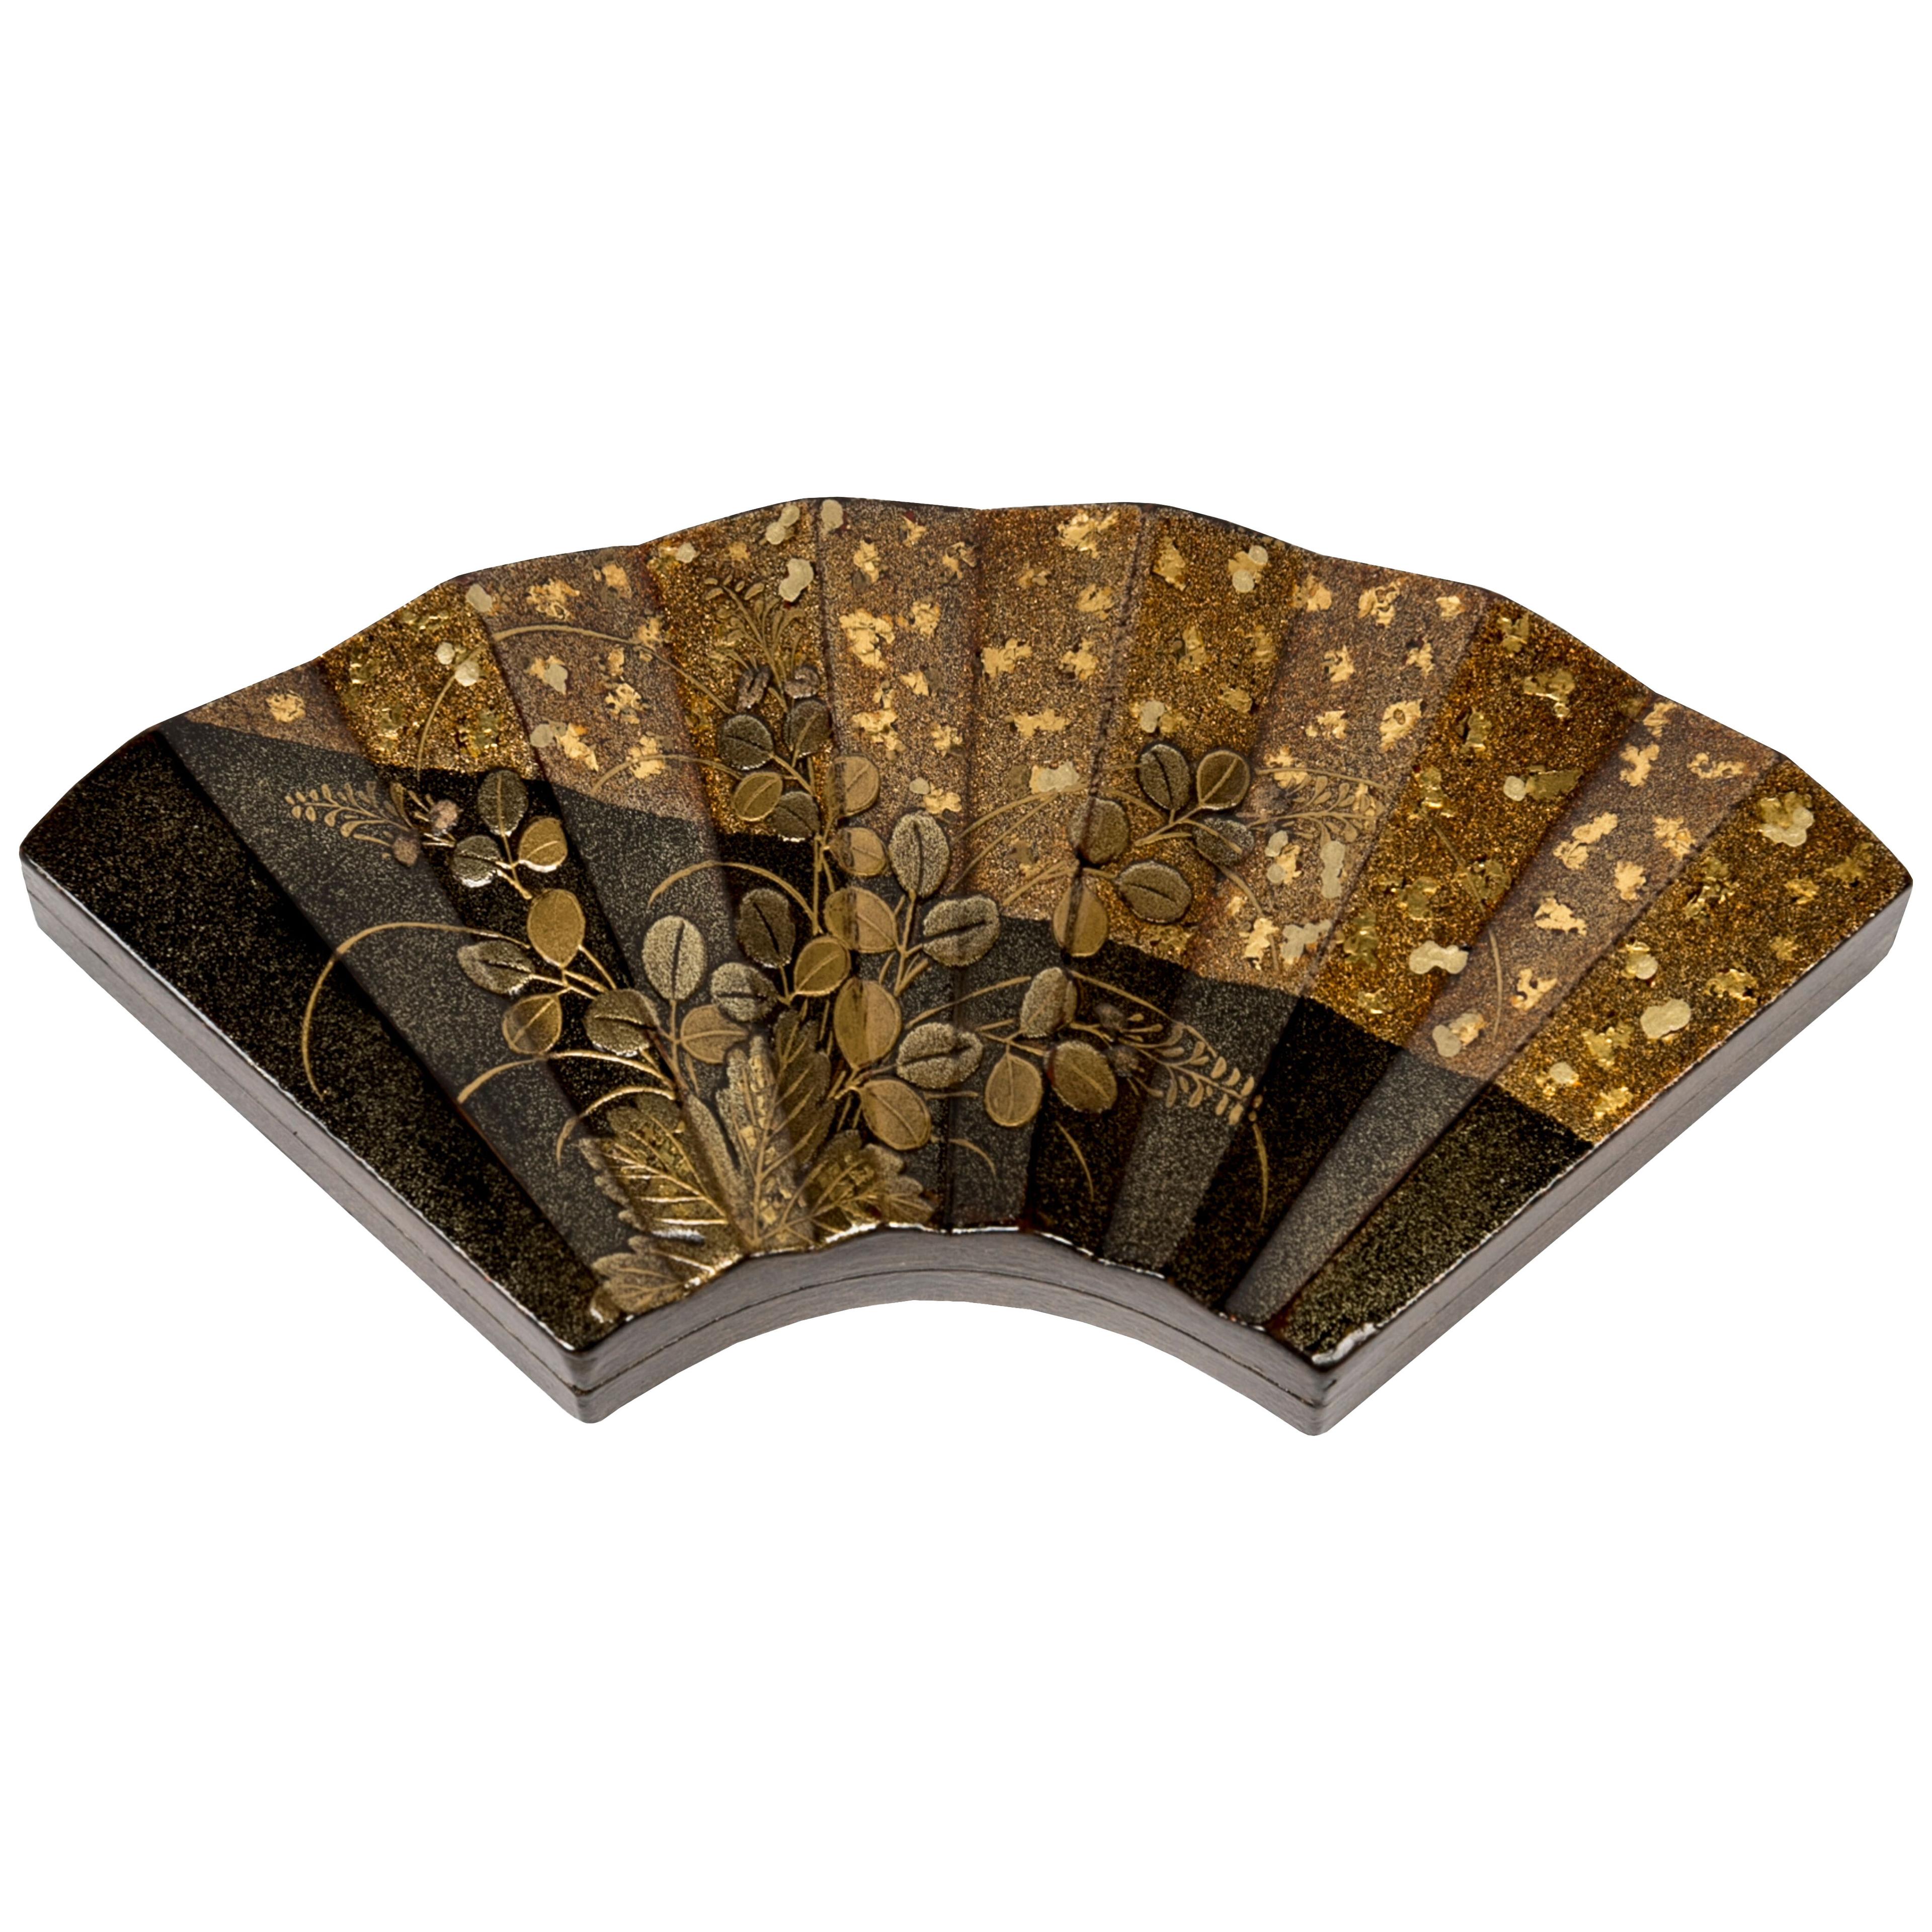 Japanese lacquer fan-shaped box (kobako)